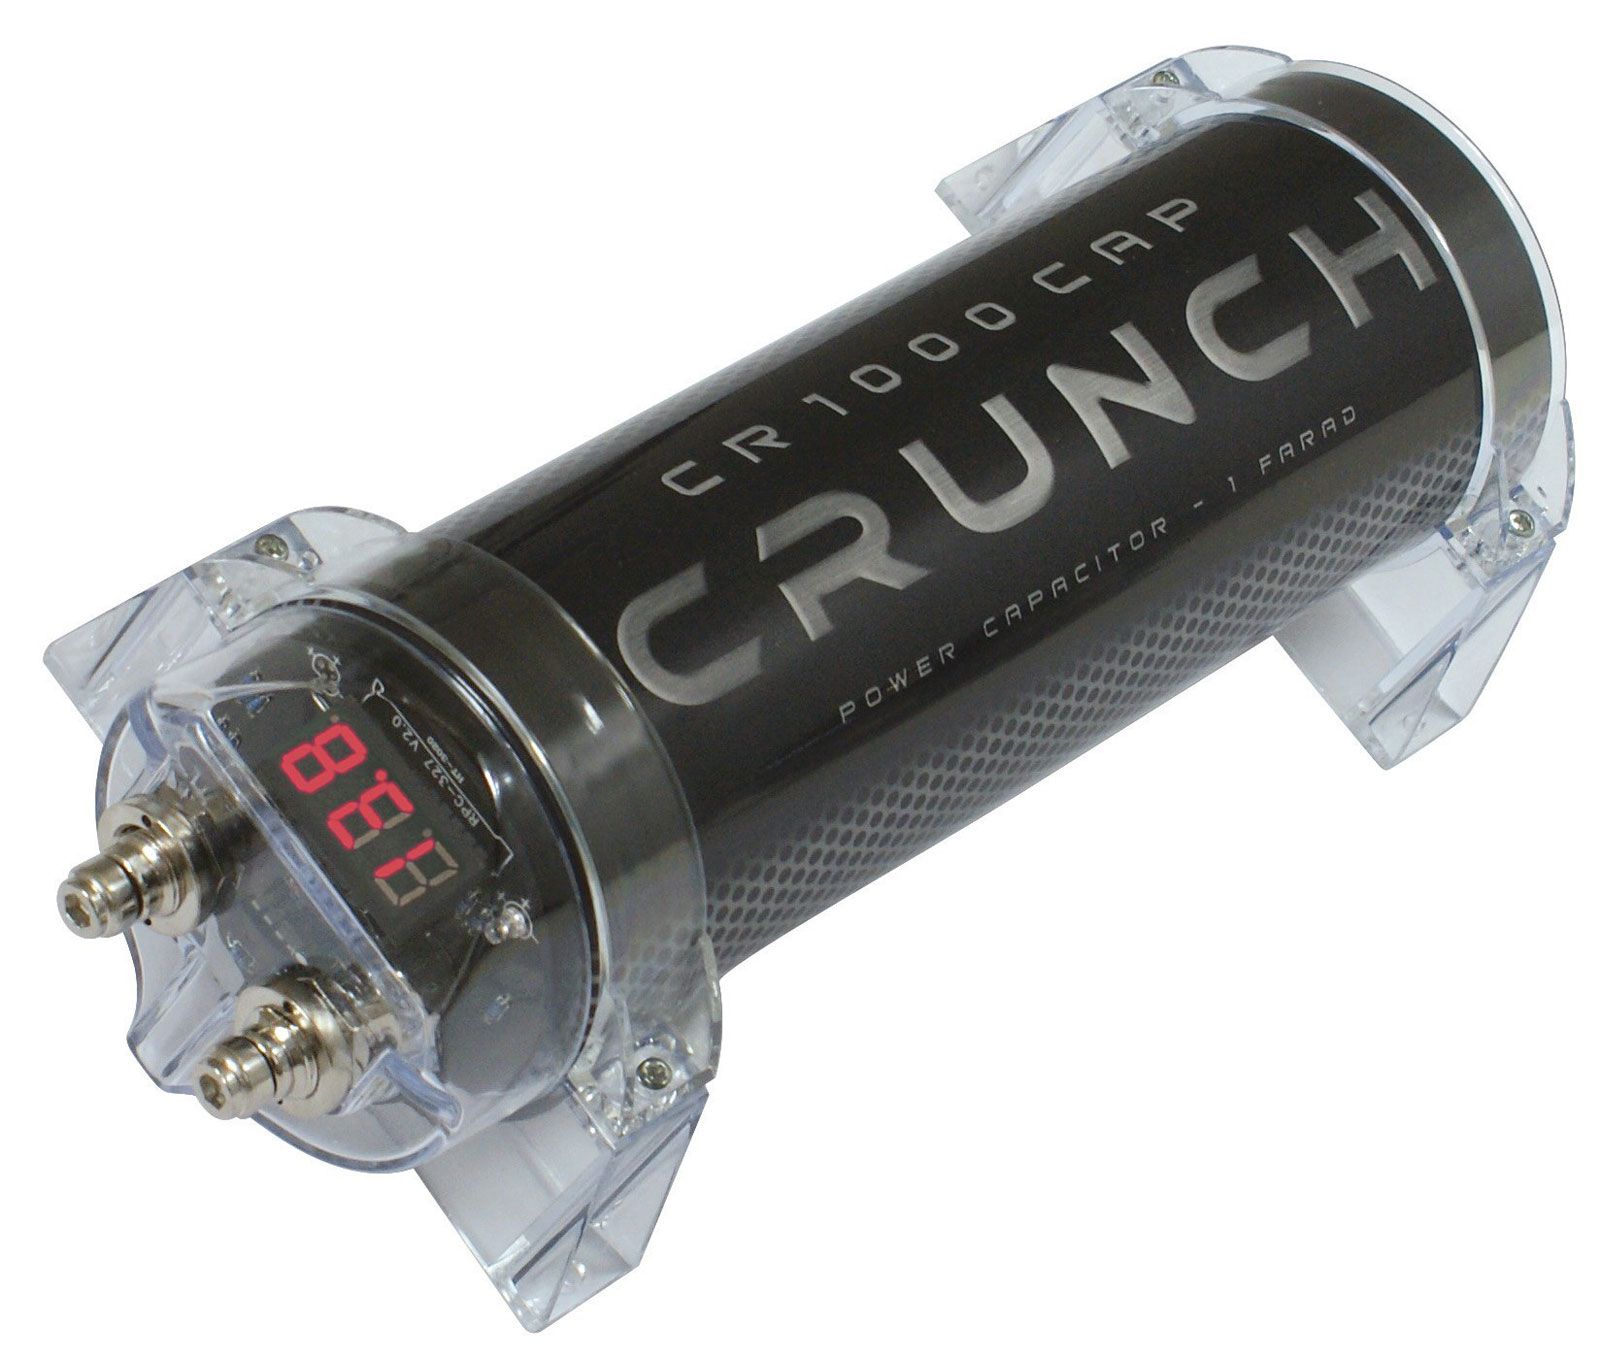 Crunch CR1000CAP - 1F Kondensator